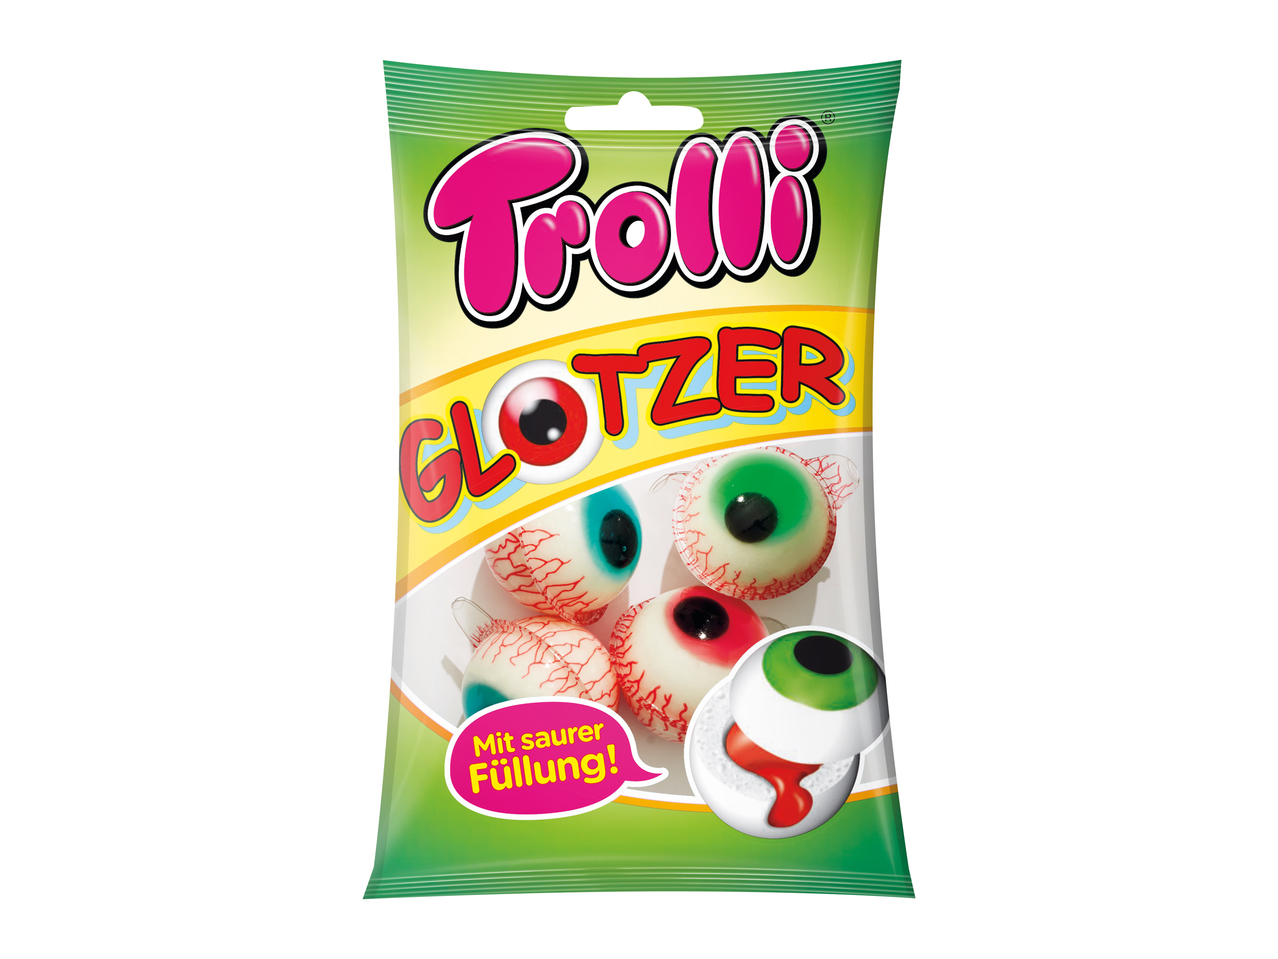 Glotzer Trolli